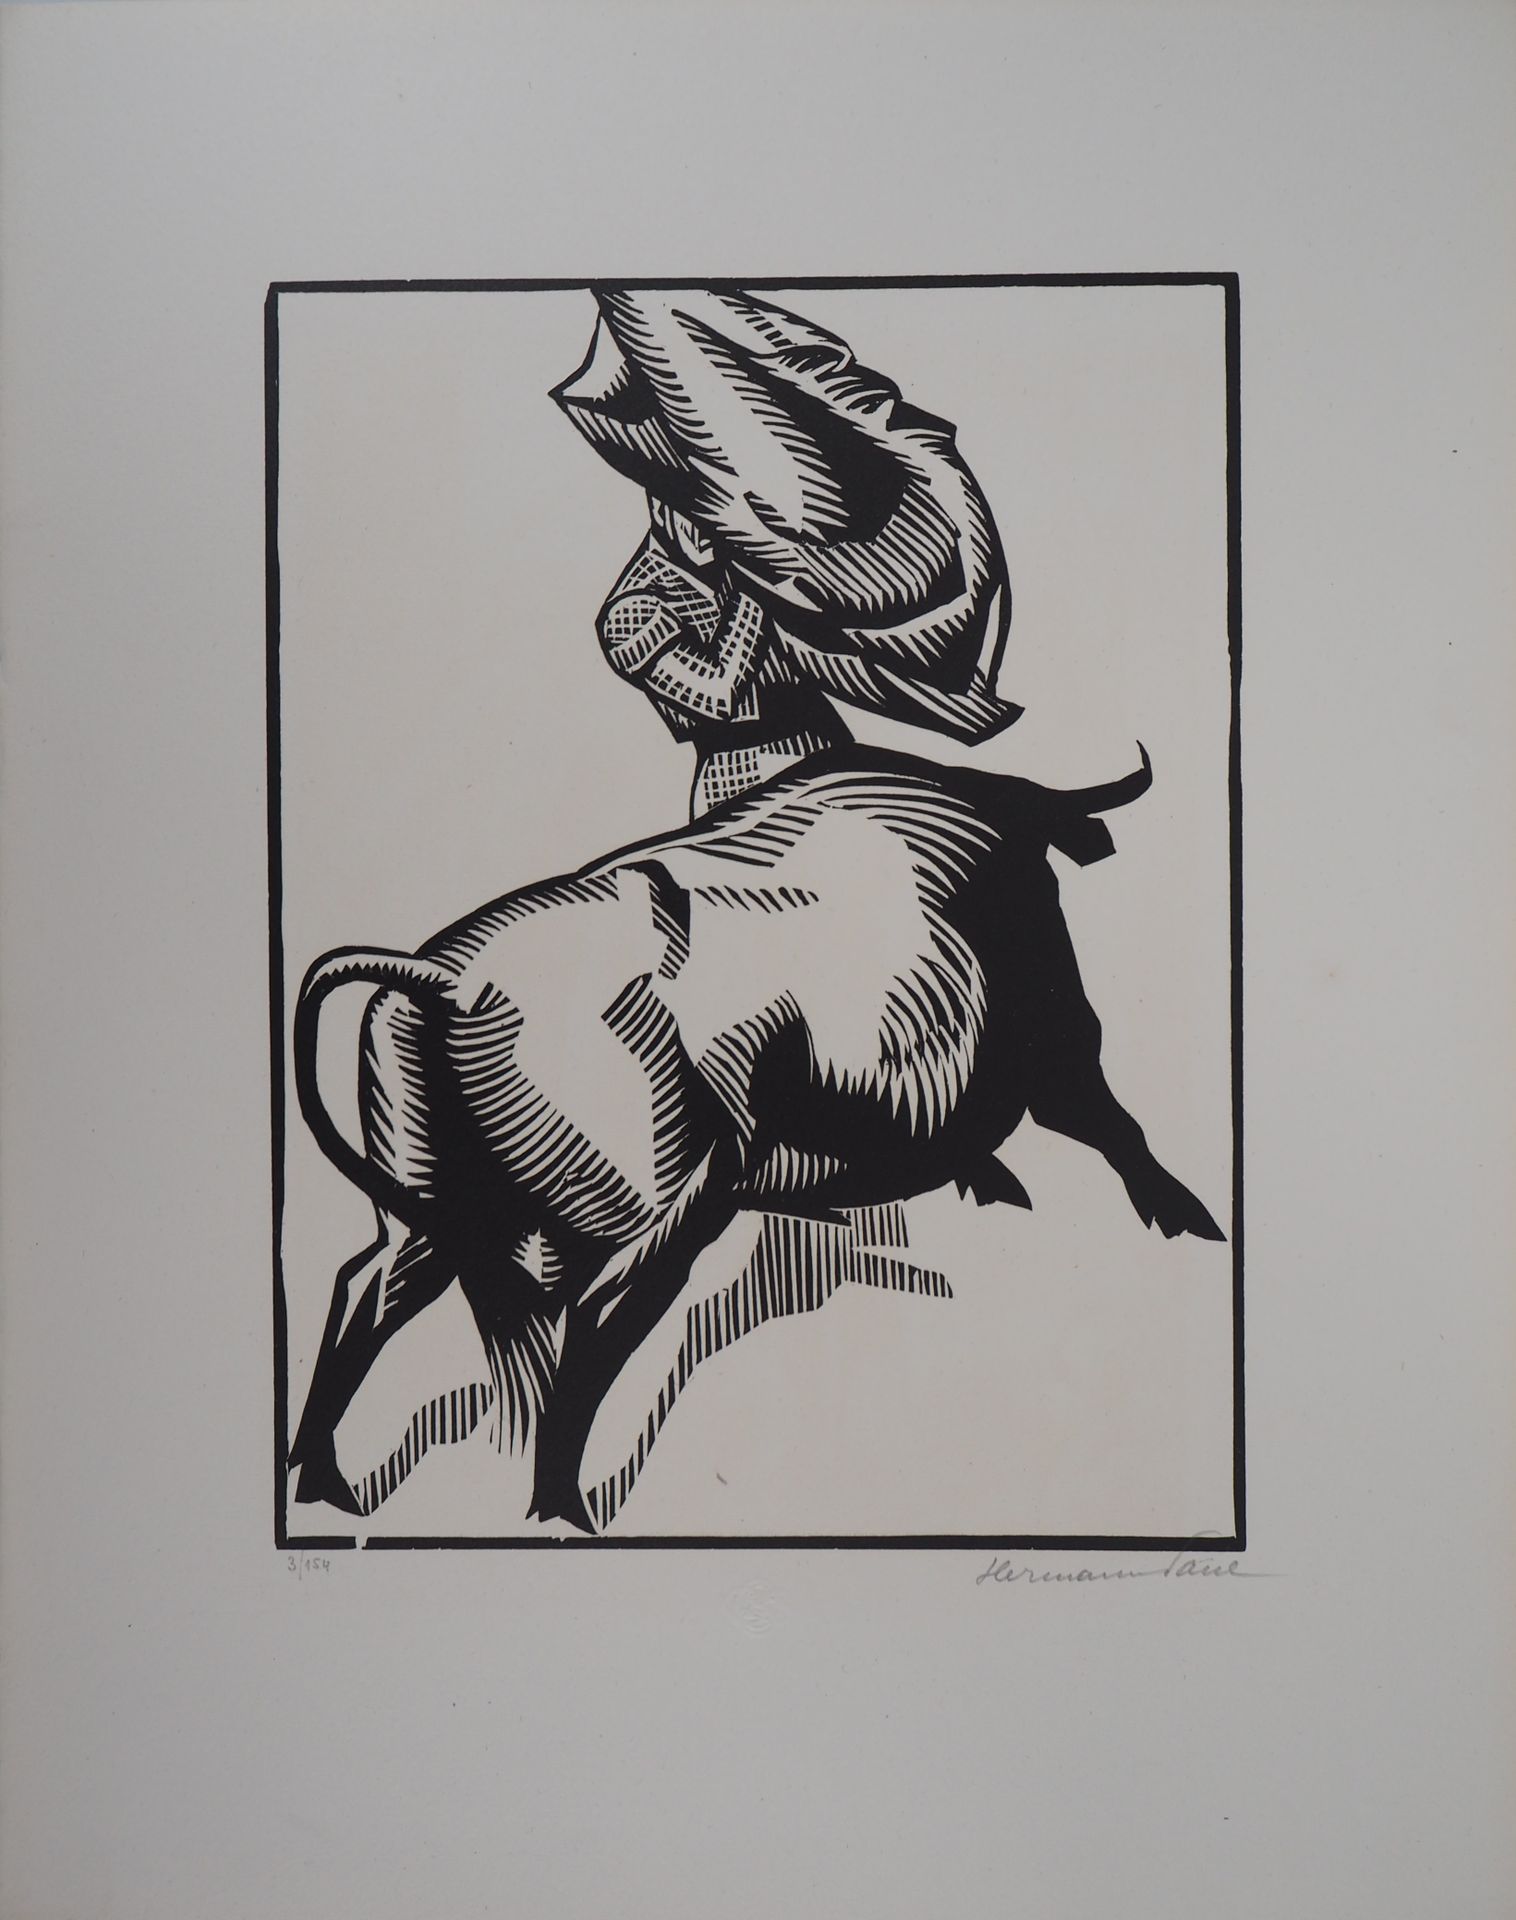 HERMANN-PAUL HERMANN-PAUL

Bullfighting, A Muleta Pass, 1922

Original wood engr&hellip;